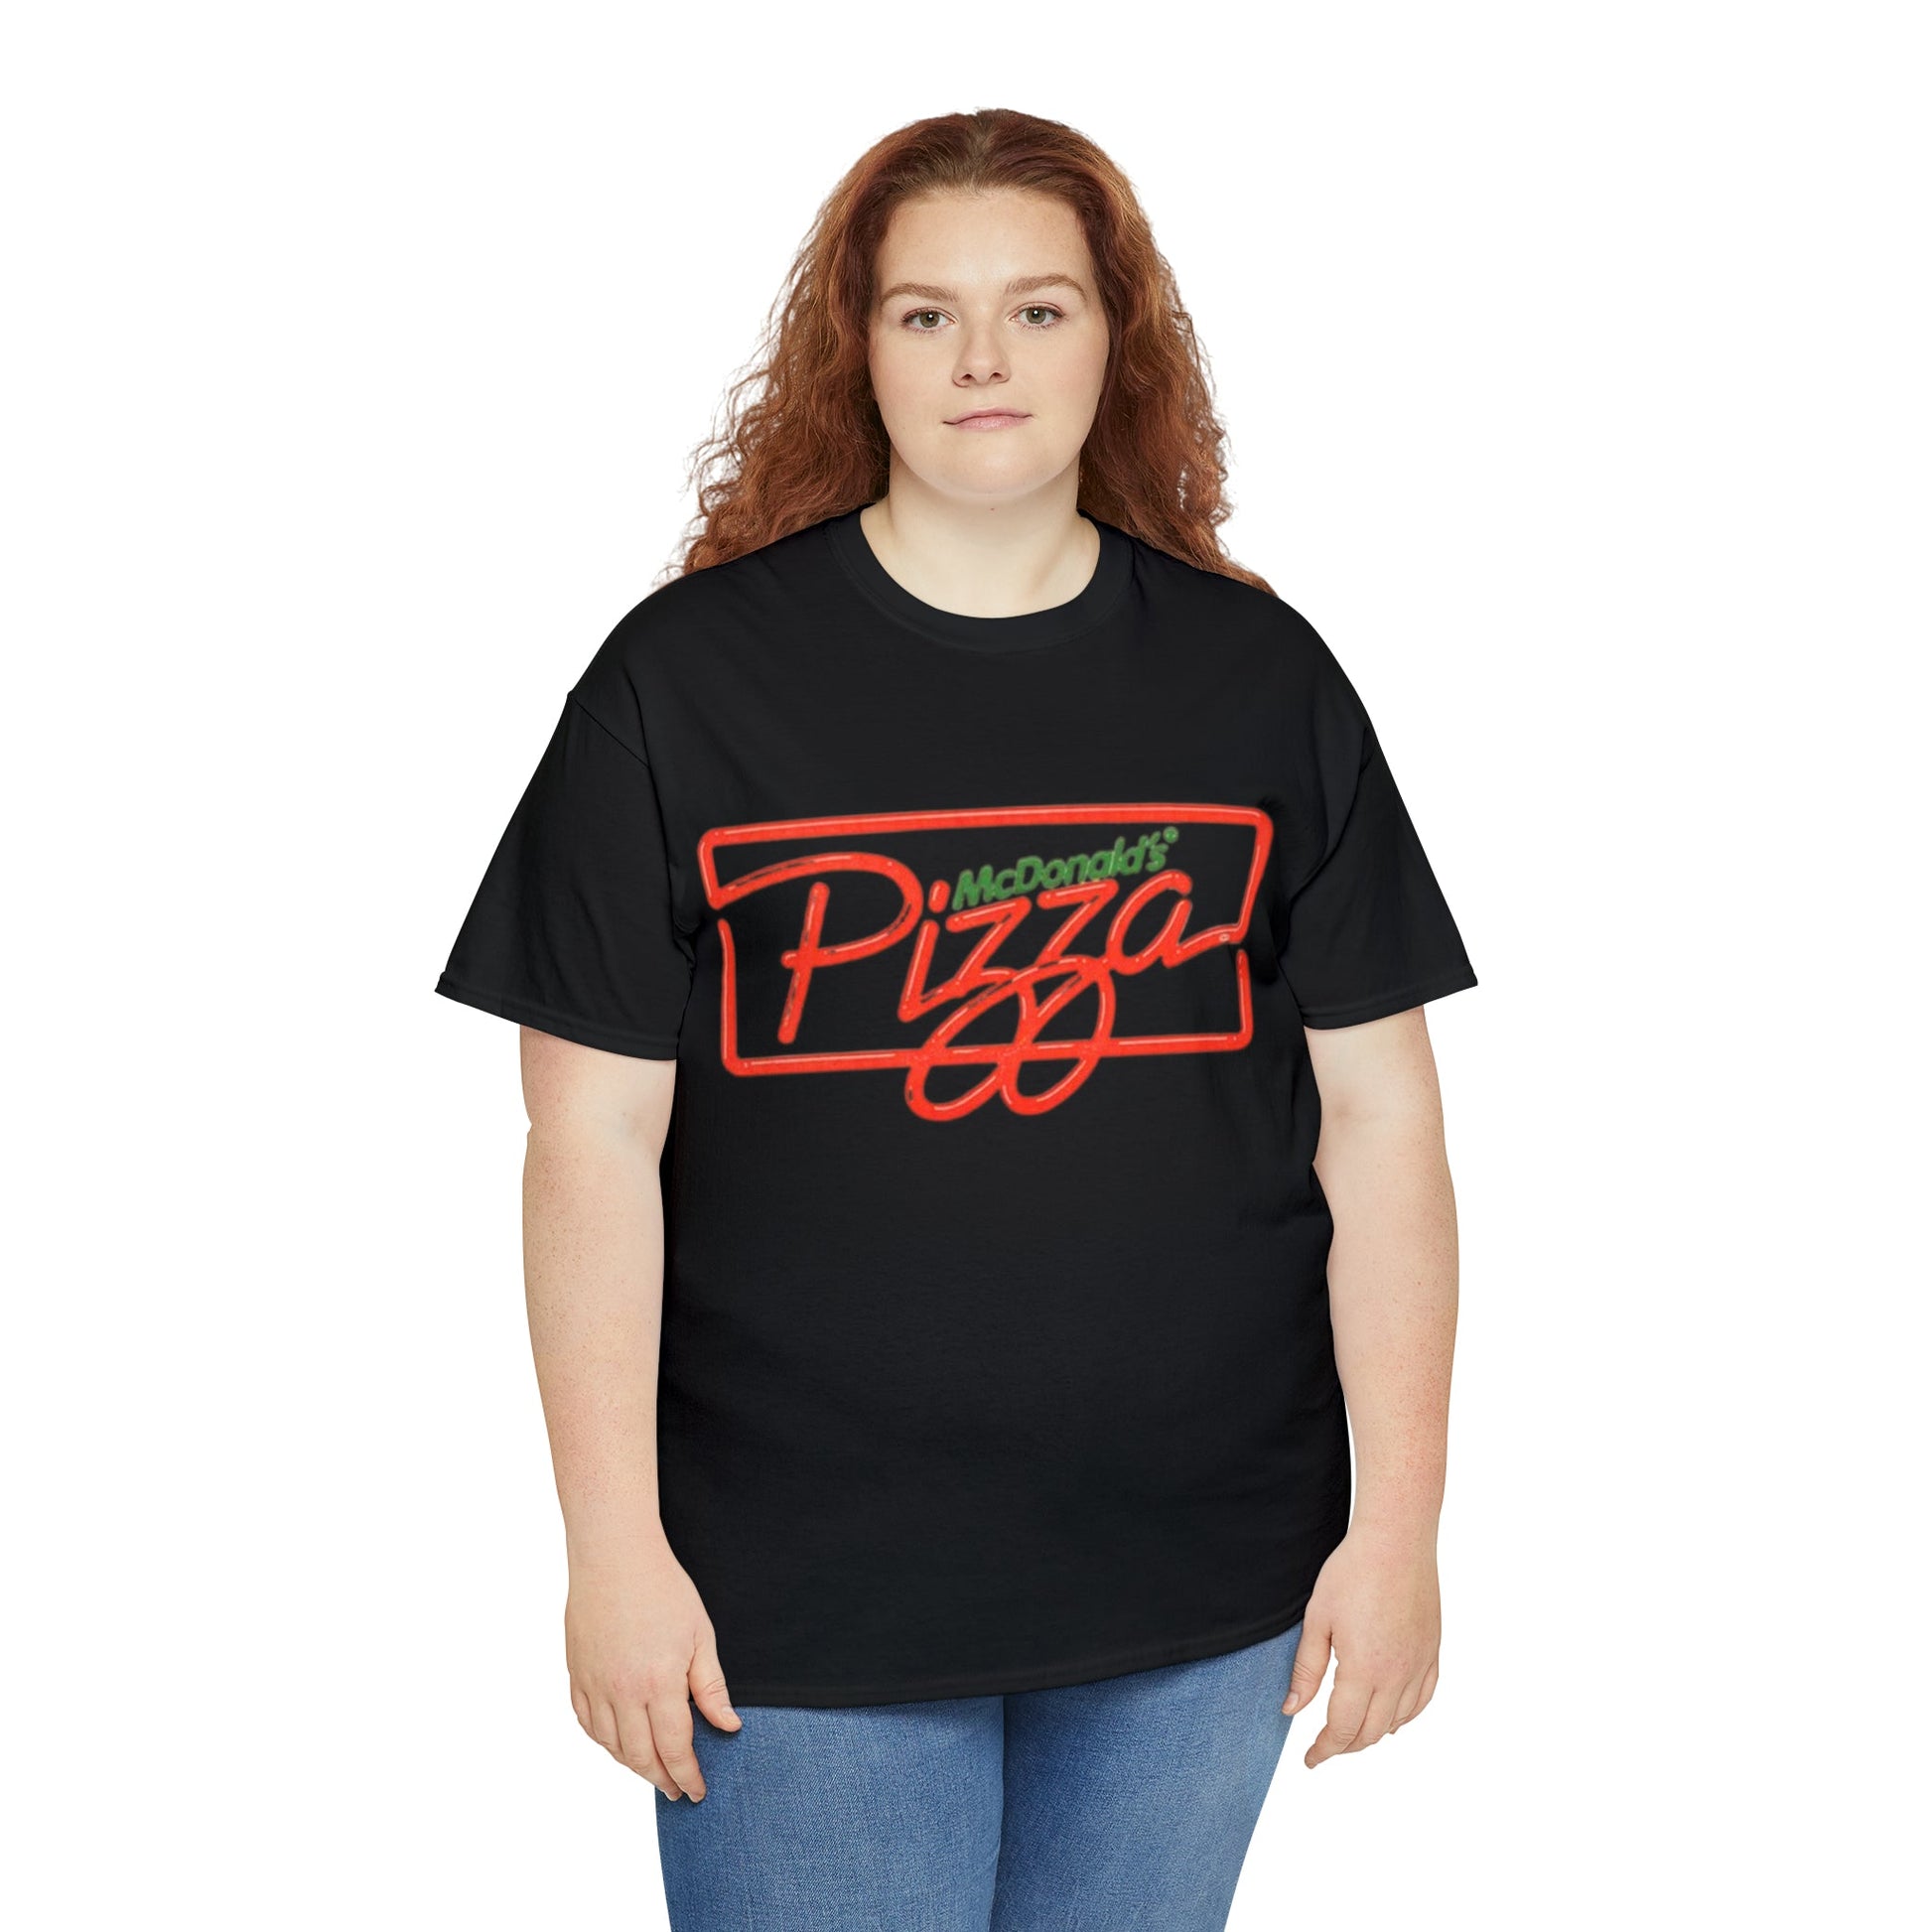 McPizza Mcdonalds Pizza T-Shirt - RetroTeeShop